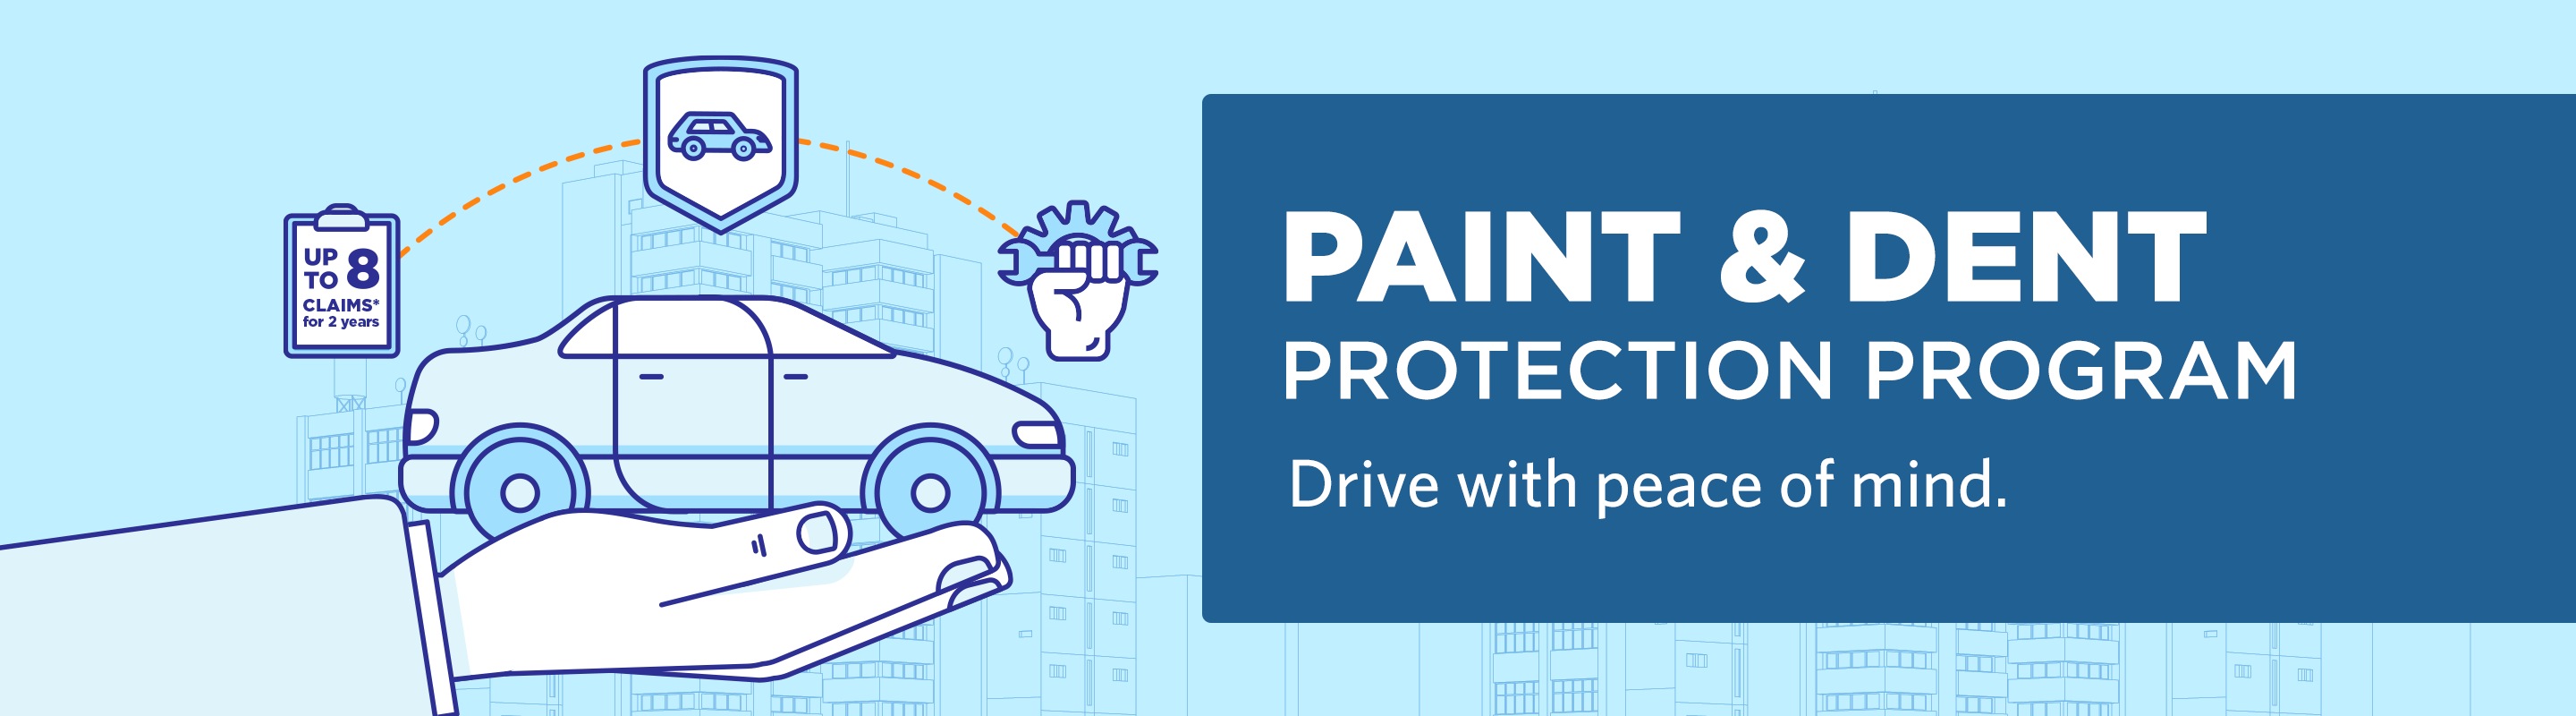 Paint  Dent Protection Program KV_2880x800